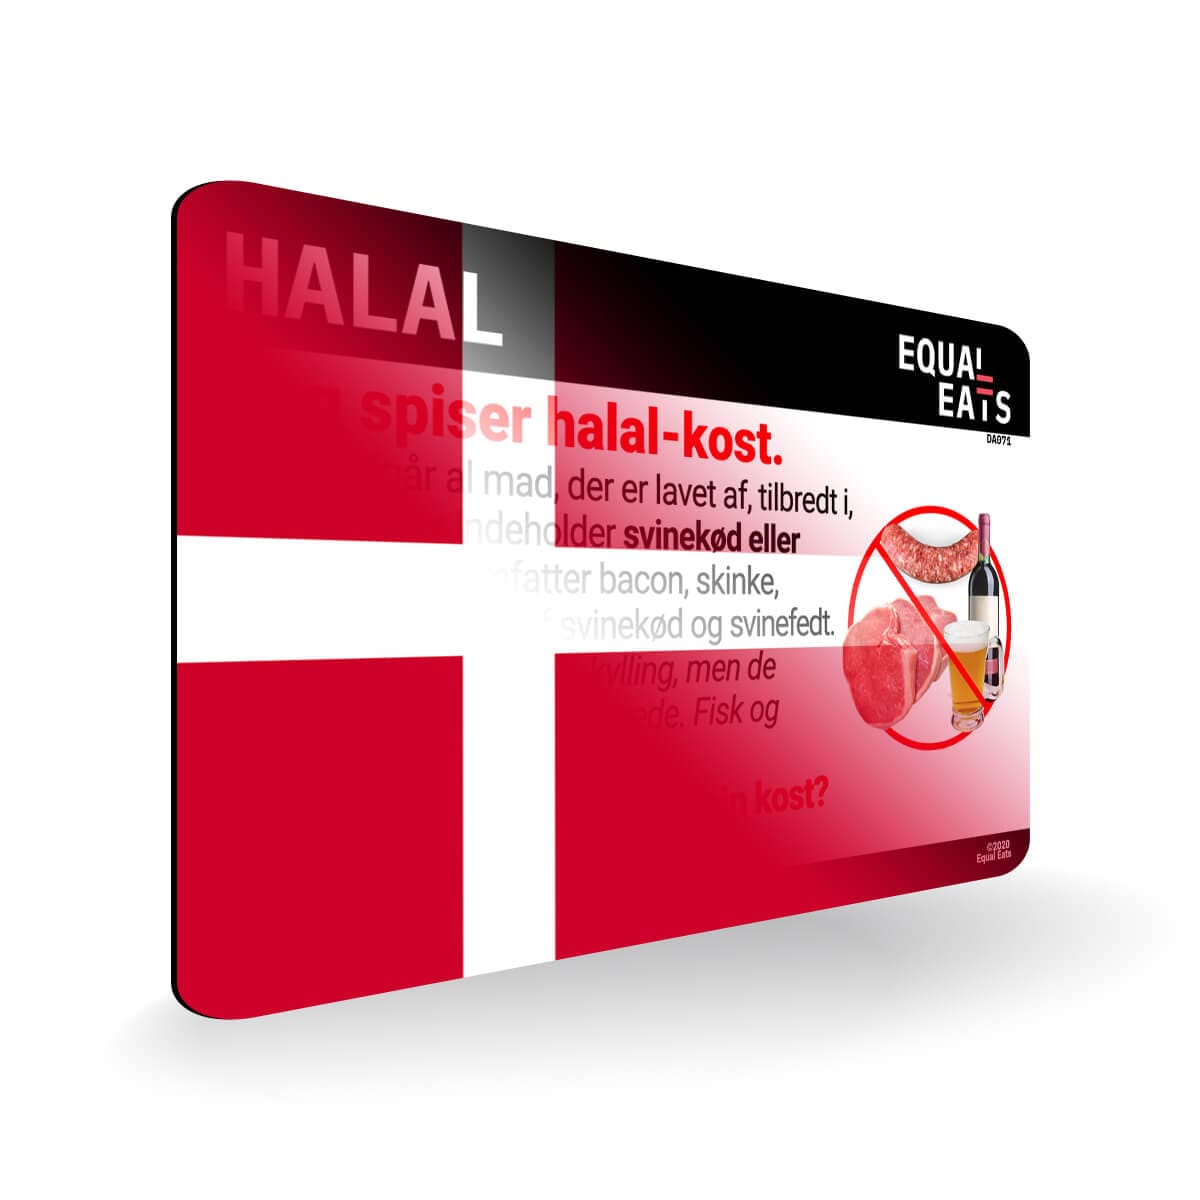 Halal Diet in Danish. Halal Food Card for Denmark